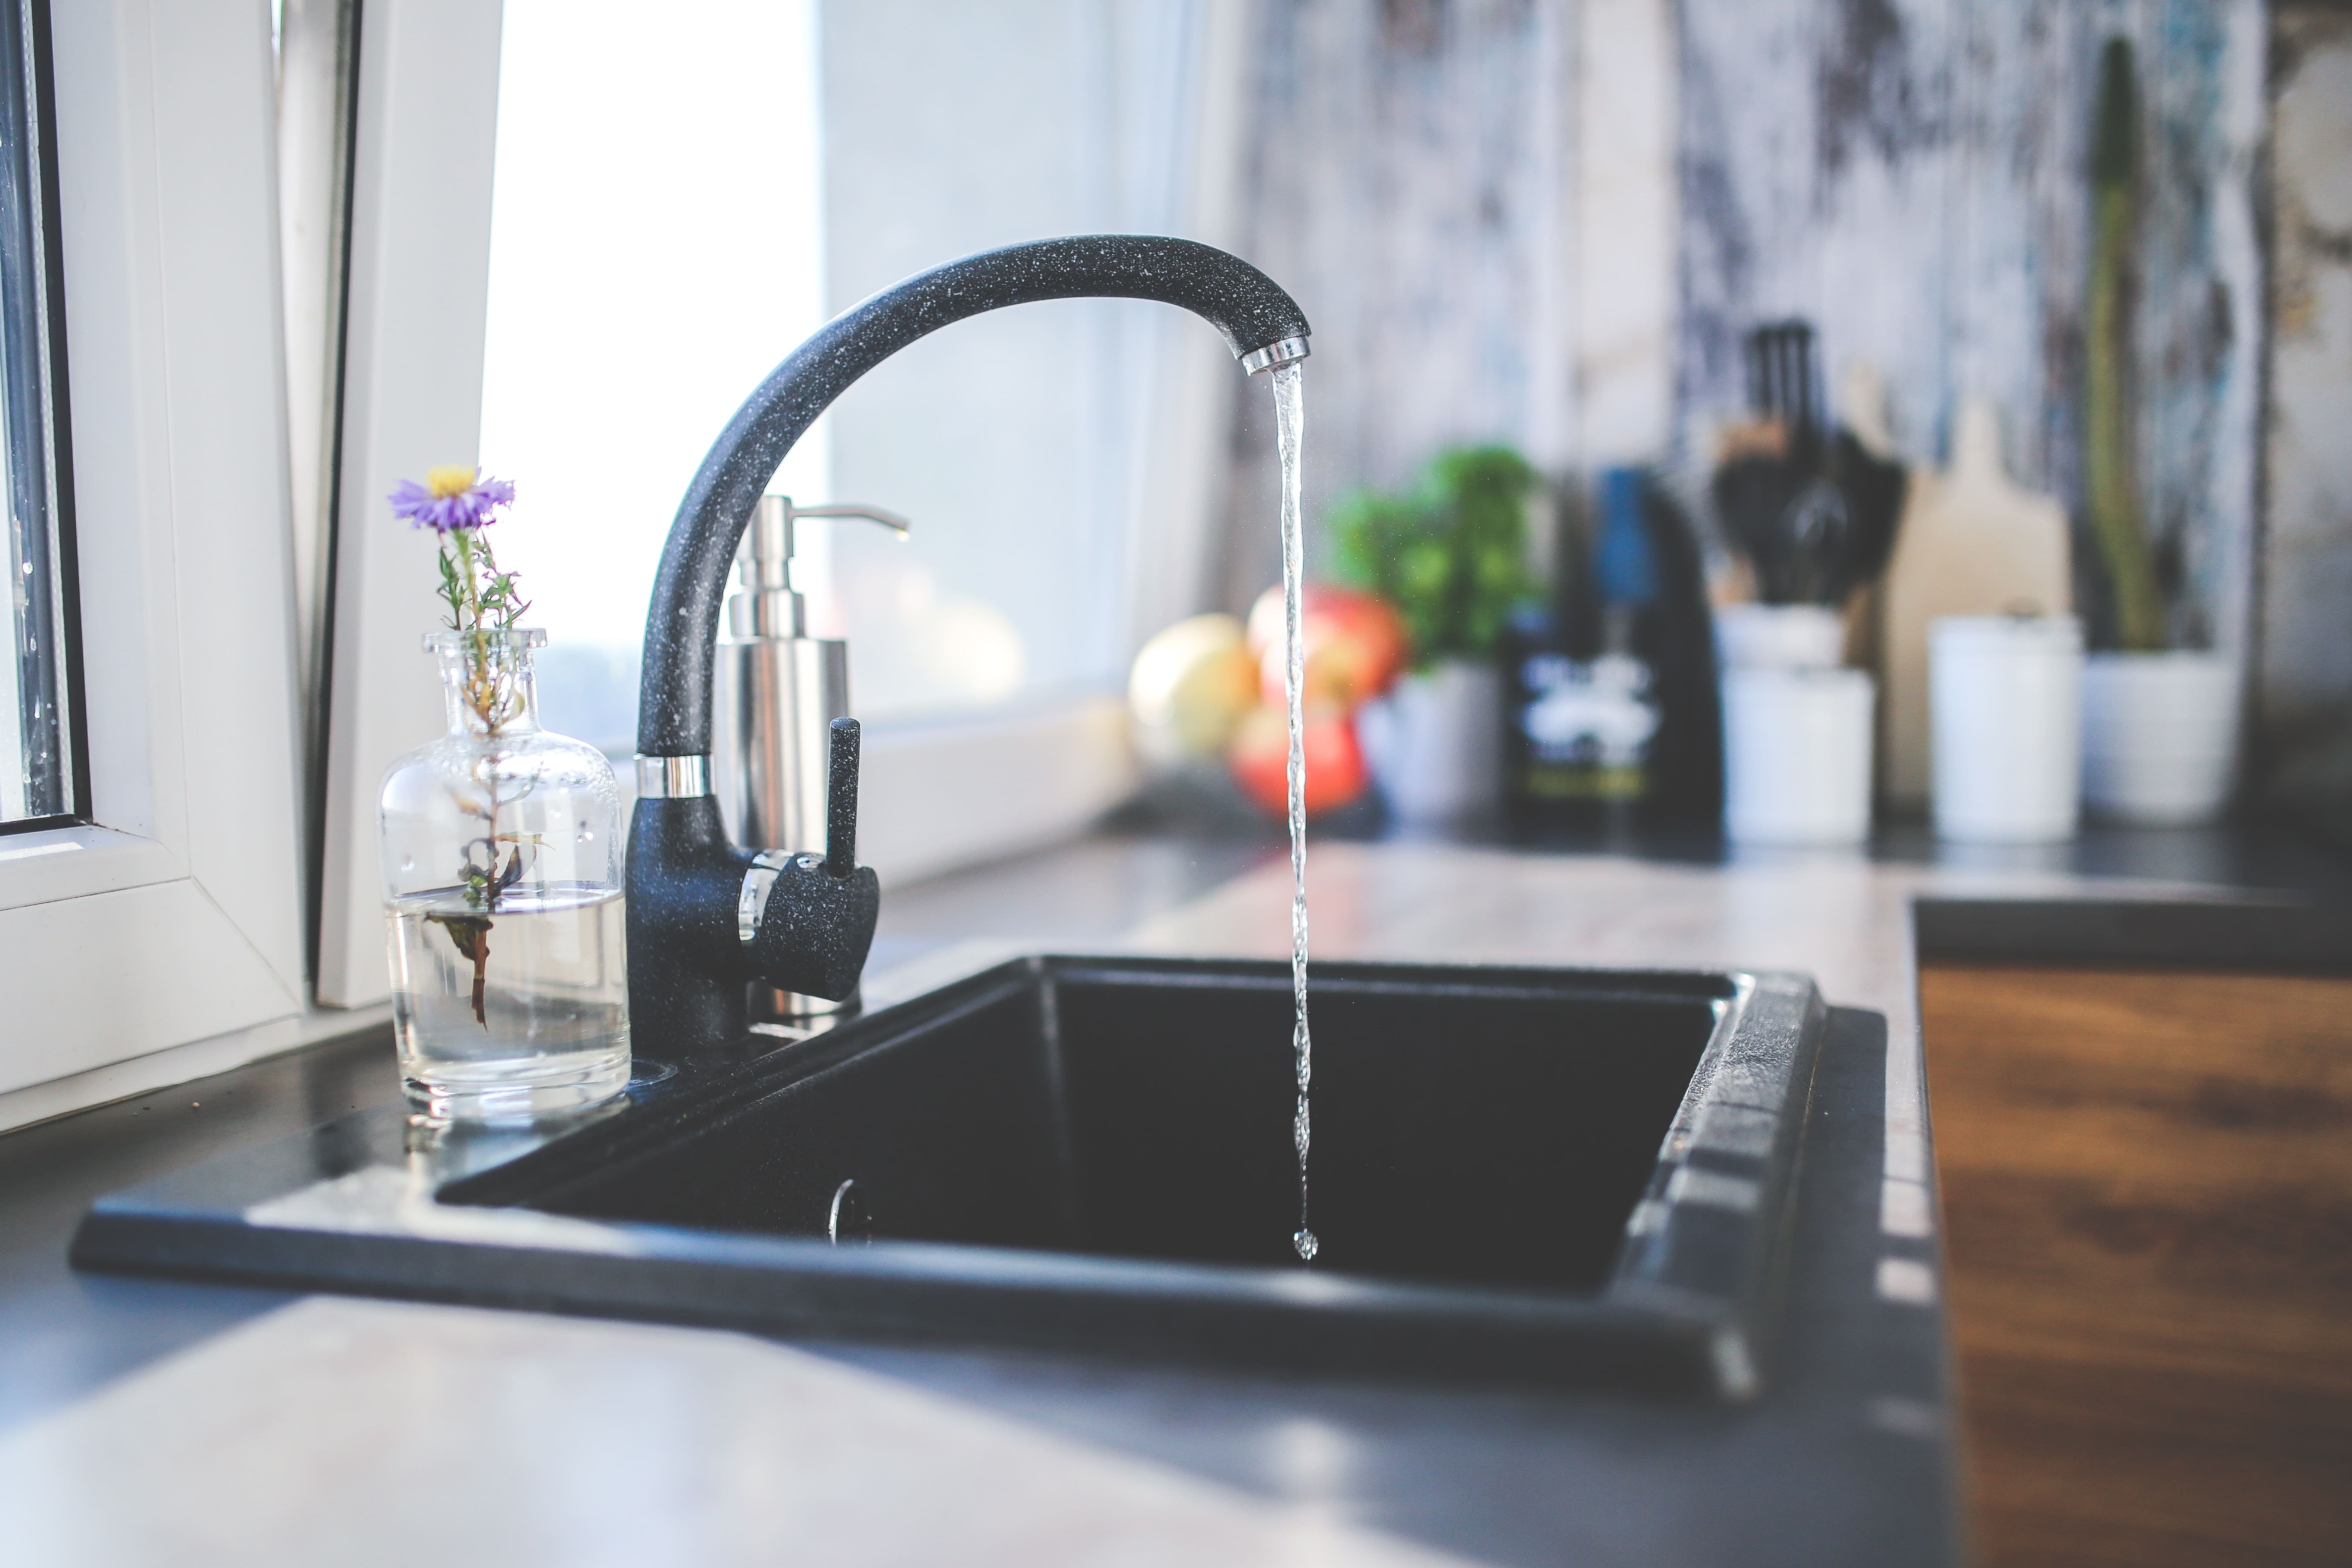 At Home, Plumbing, Home Maintenance, Water Leaks, Water Damage, Faucet, Leak